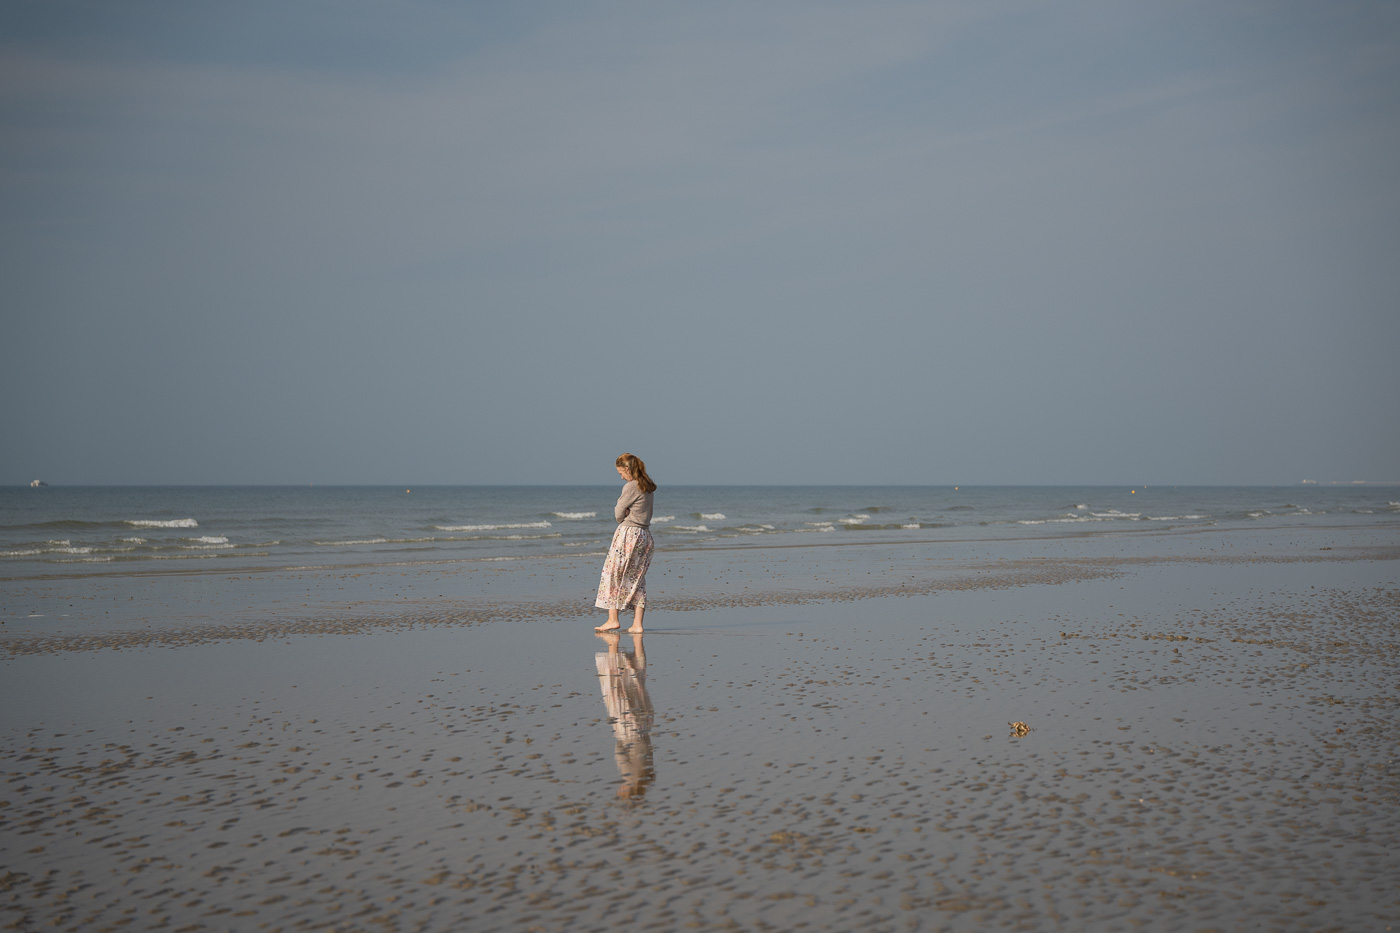 Solo figure on the beach